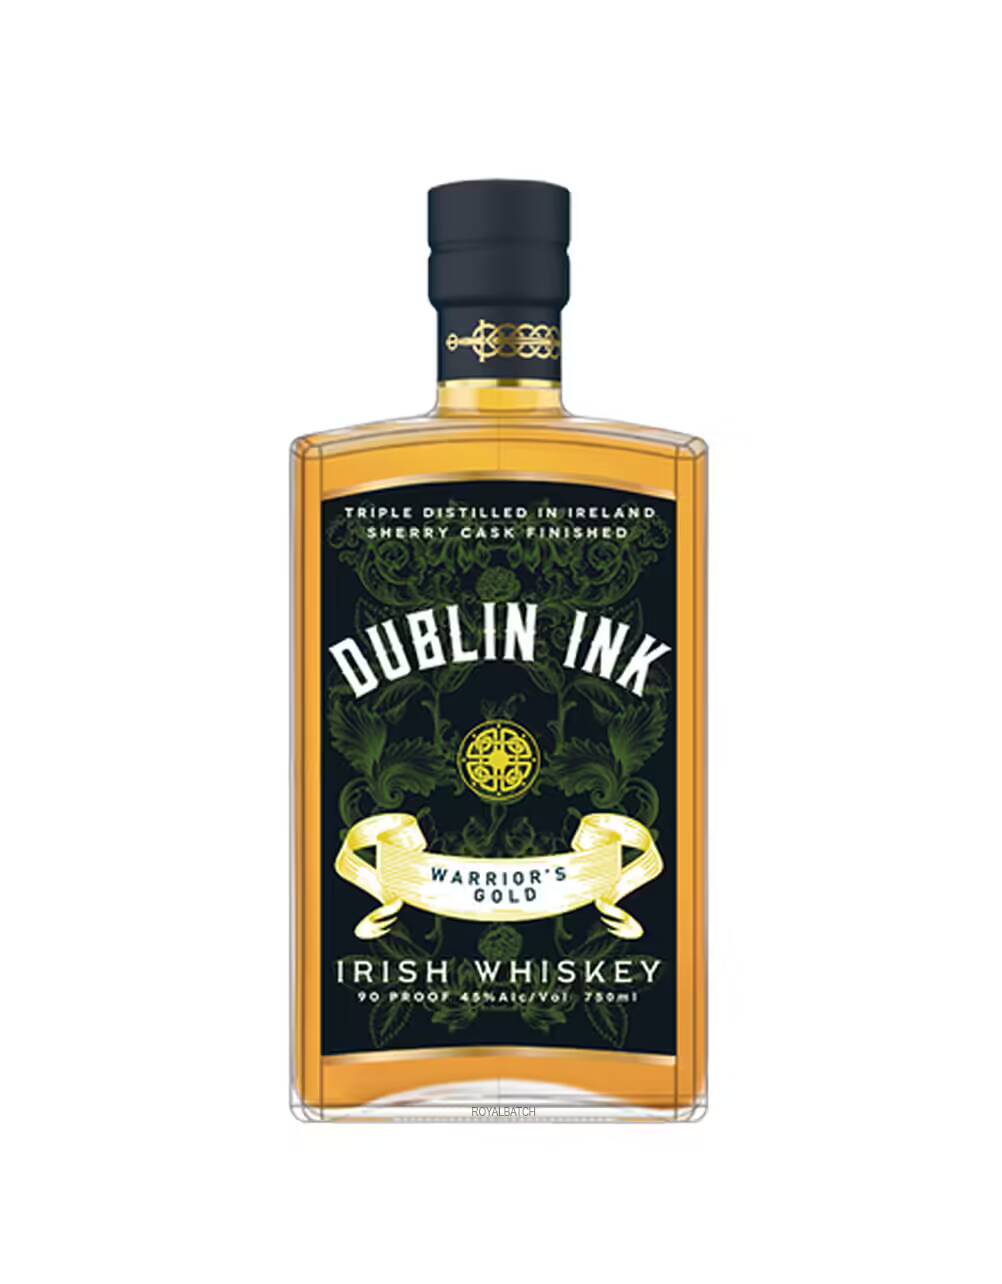 Dublin Ink Warriors Gold Irish Whiskey